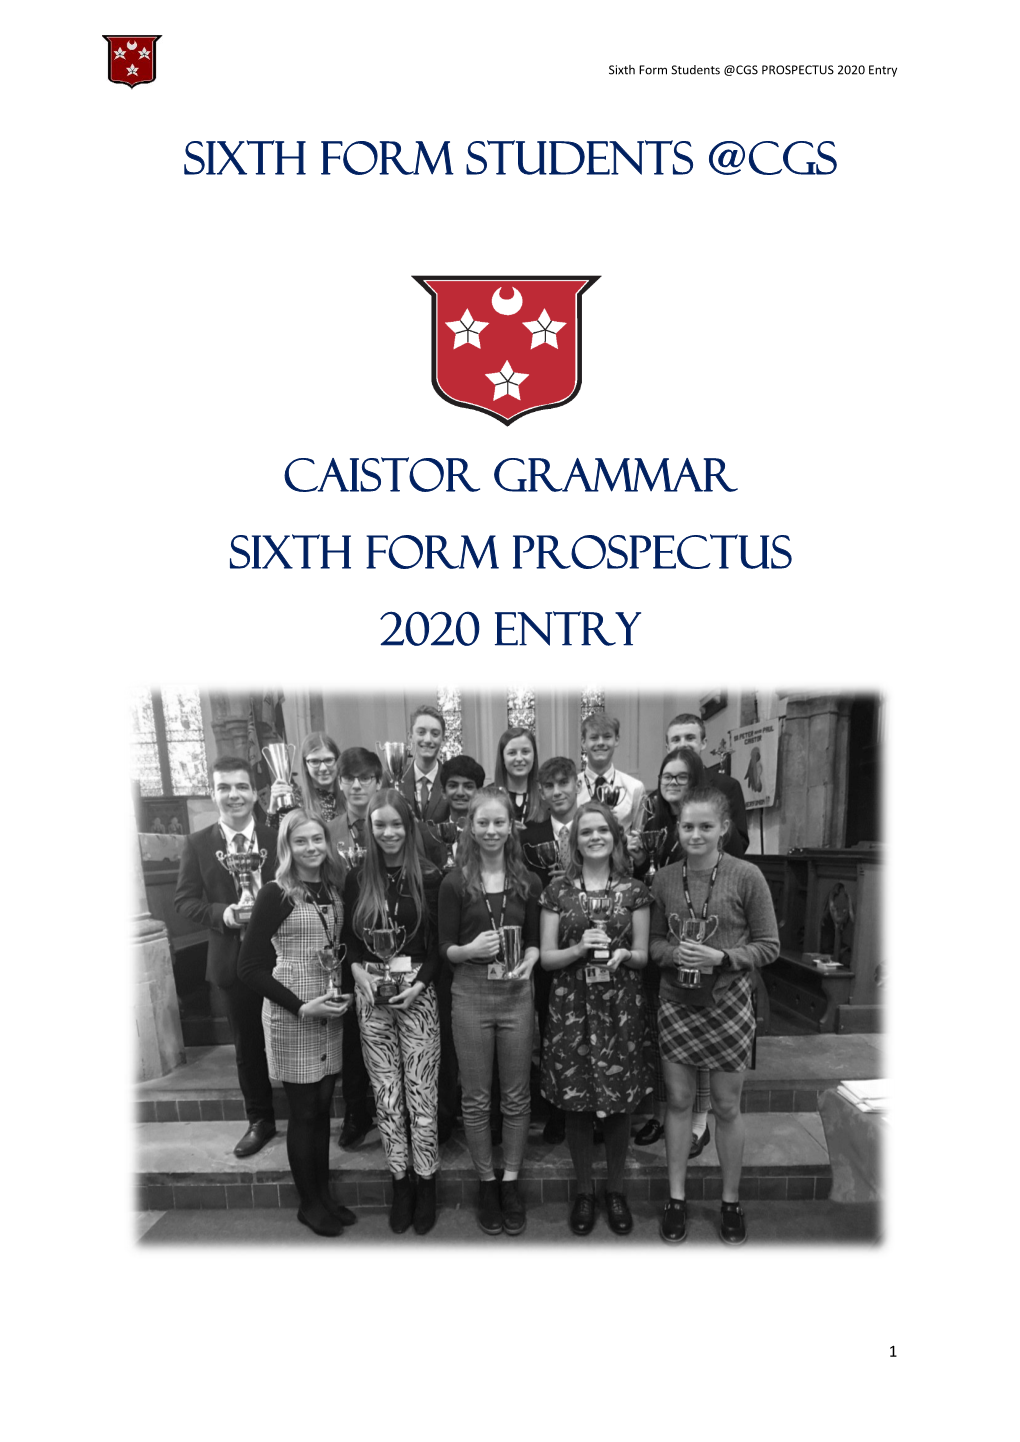 Sixth Form Students @Cgs Caistor Grammar SIXTH FORM PROSPECTUS 2020 Entry